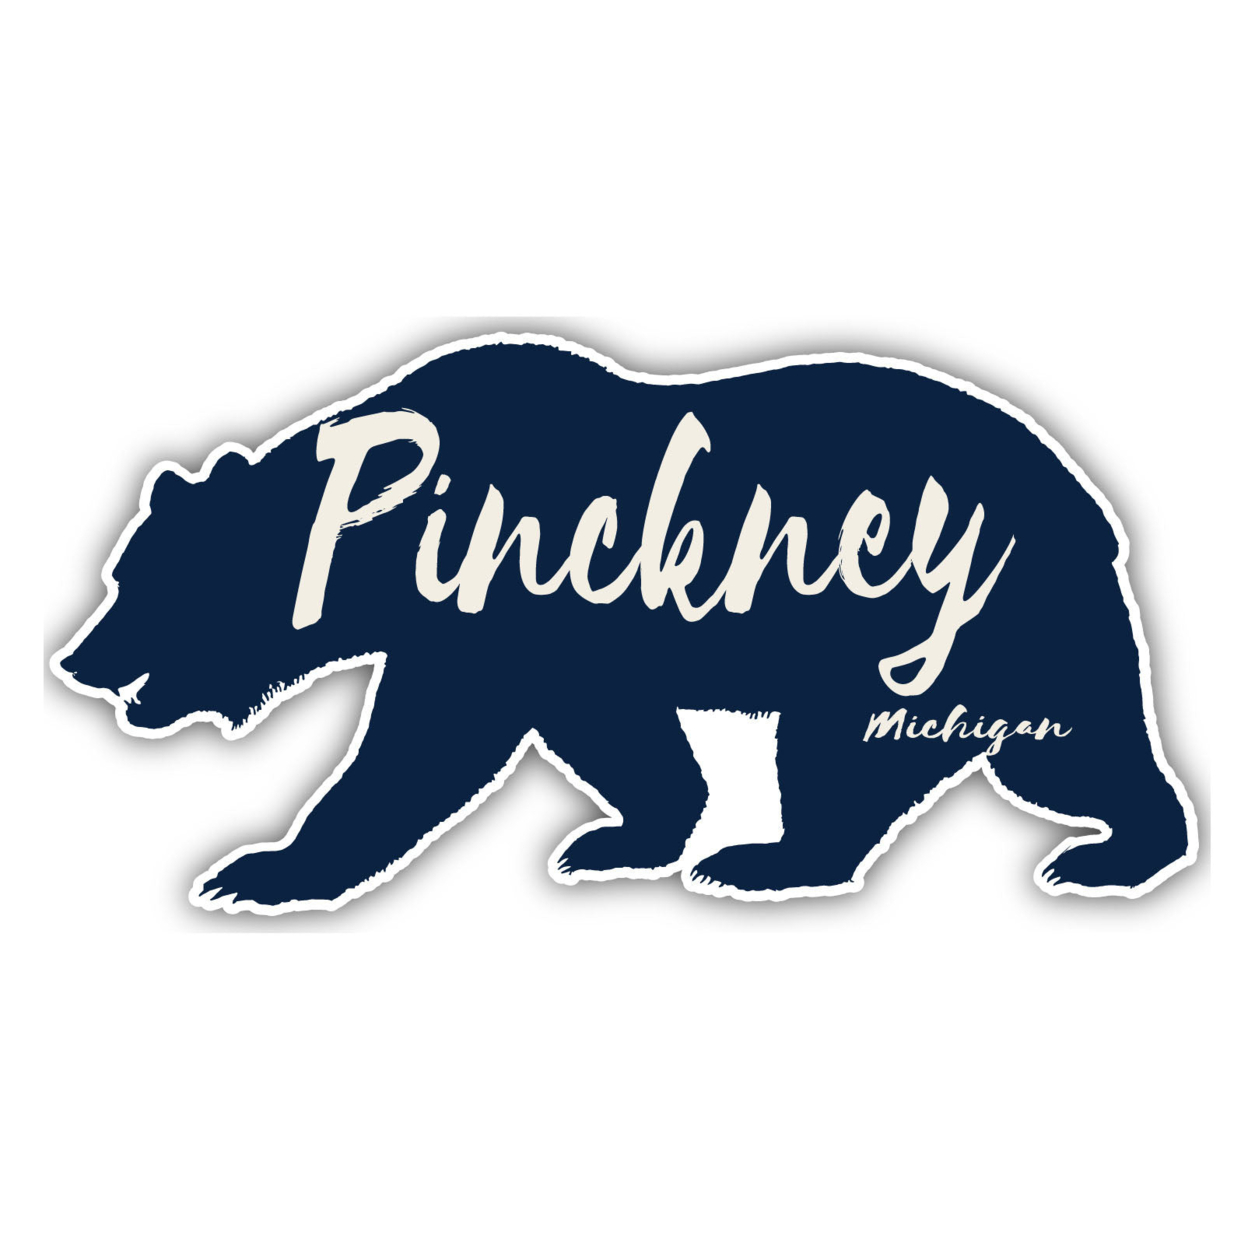 Pinckney Michigan Souvenir Decorative Stickers (Choose Theme And Size) - Single Unit, 4-Inch, Tent